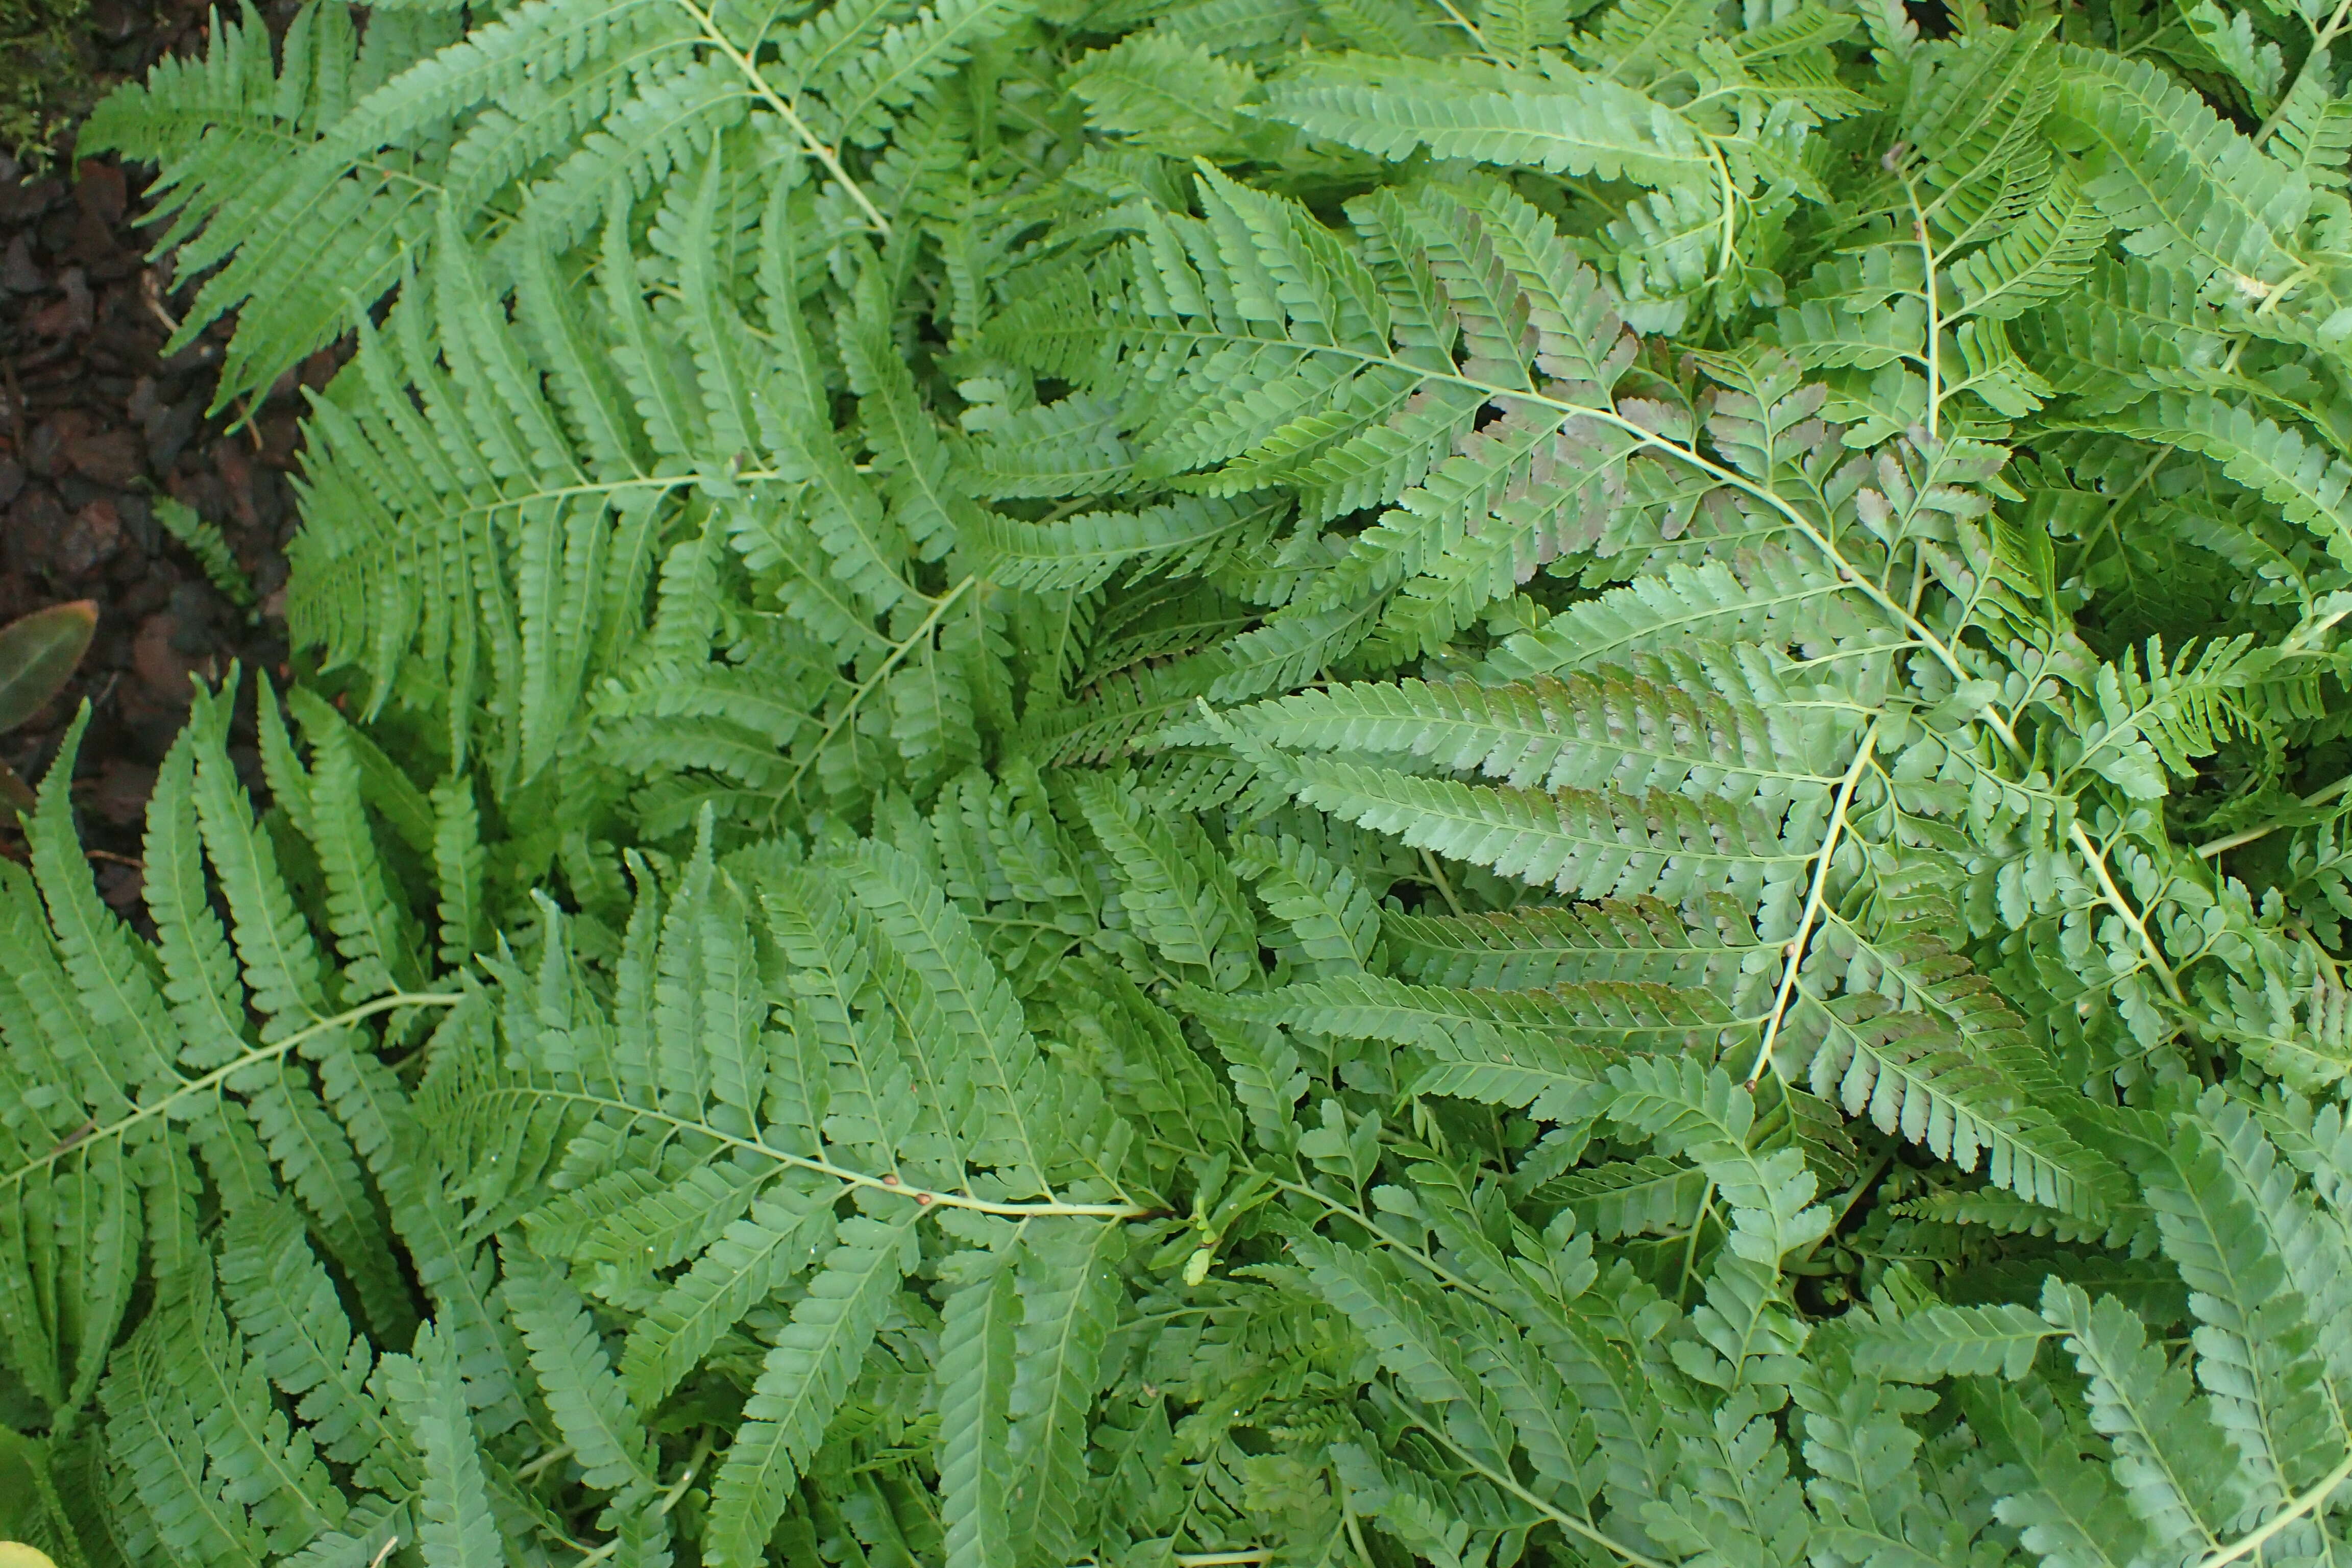 Image of cuplet fern